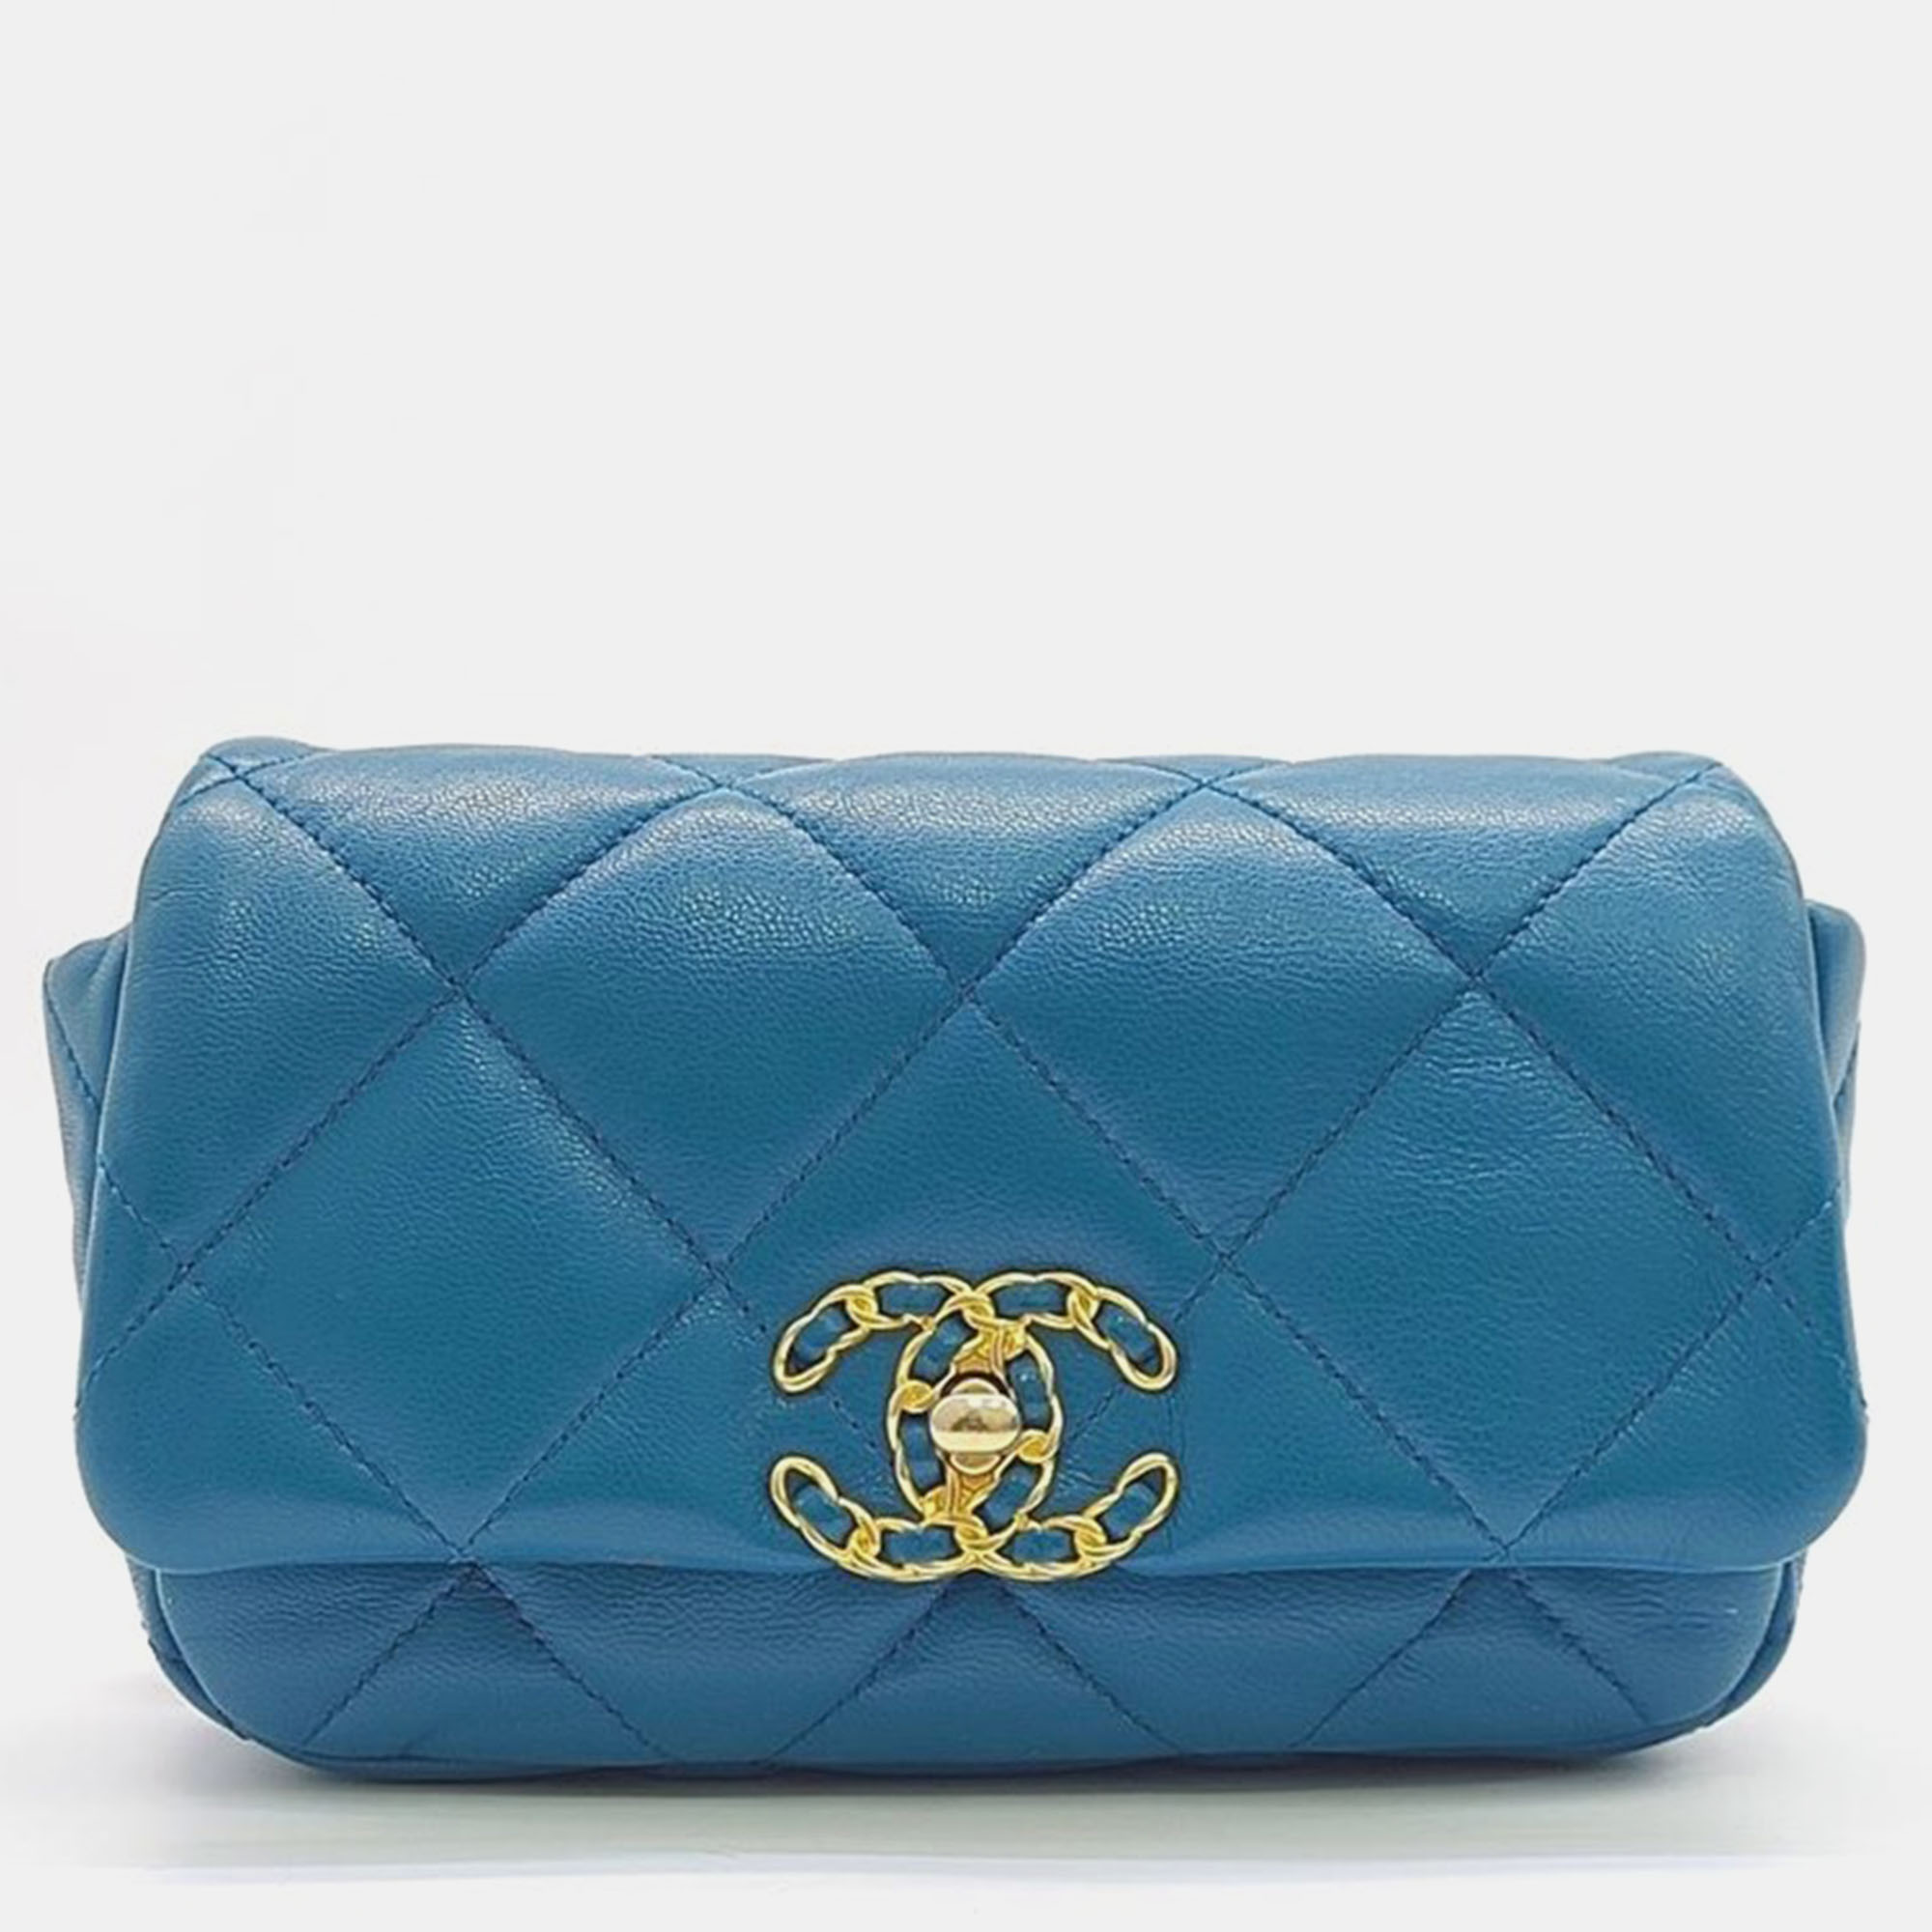 Chanel turquoise tone 19 belt bag